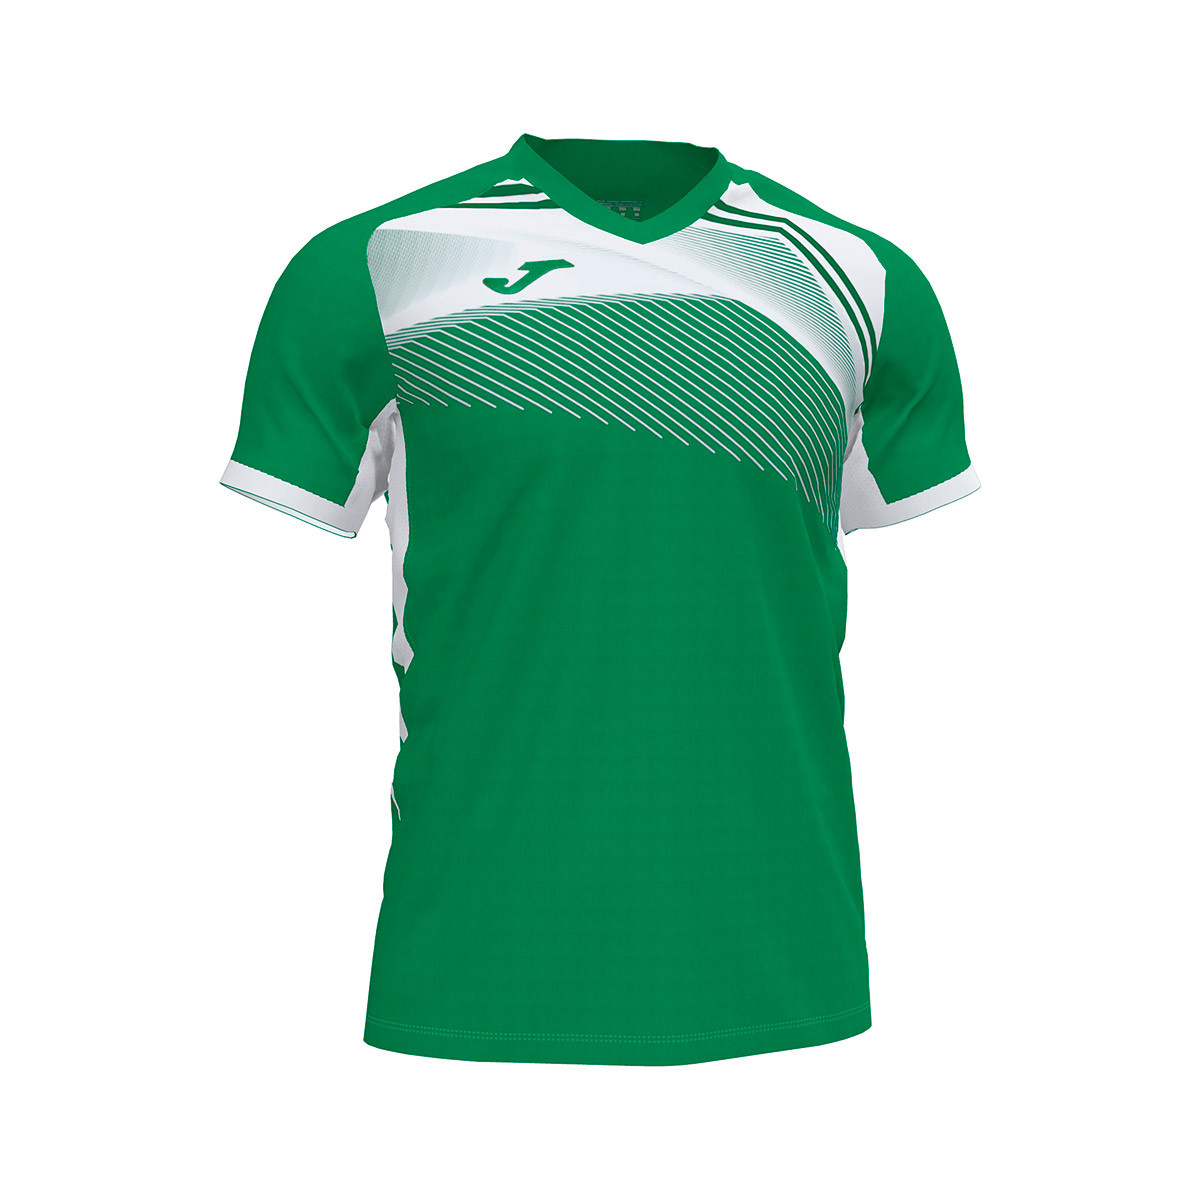 salute Incessant sadness Camiseta Joma Supernova II m/c Verde-Blanco - Fútbol Emotion